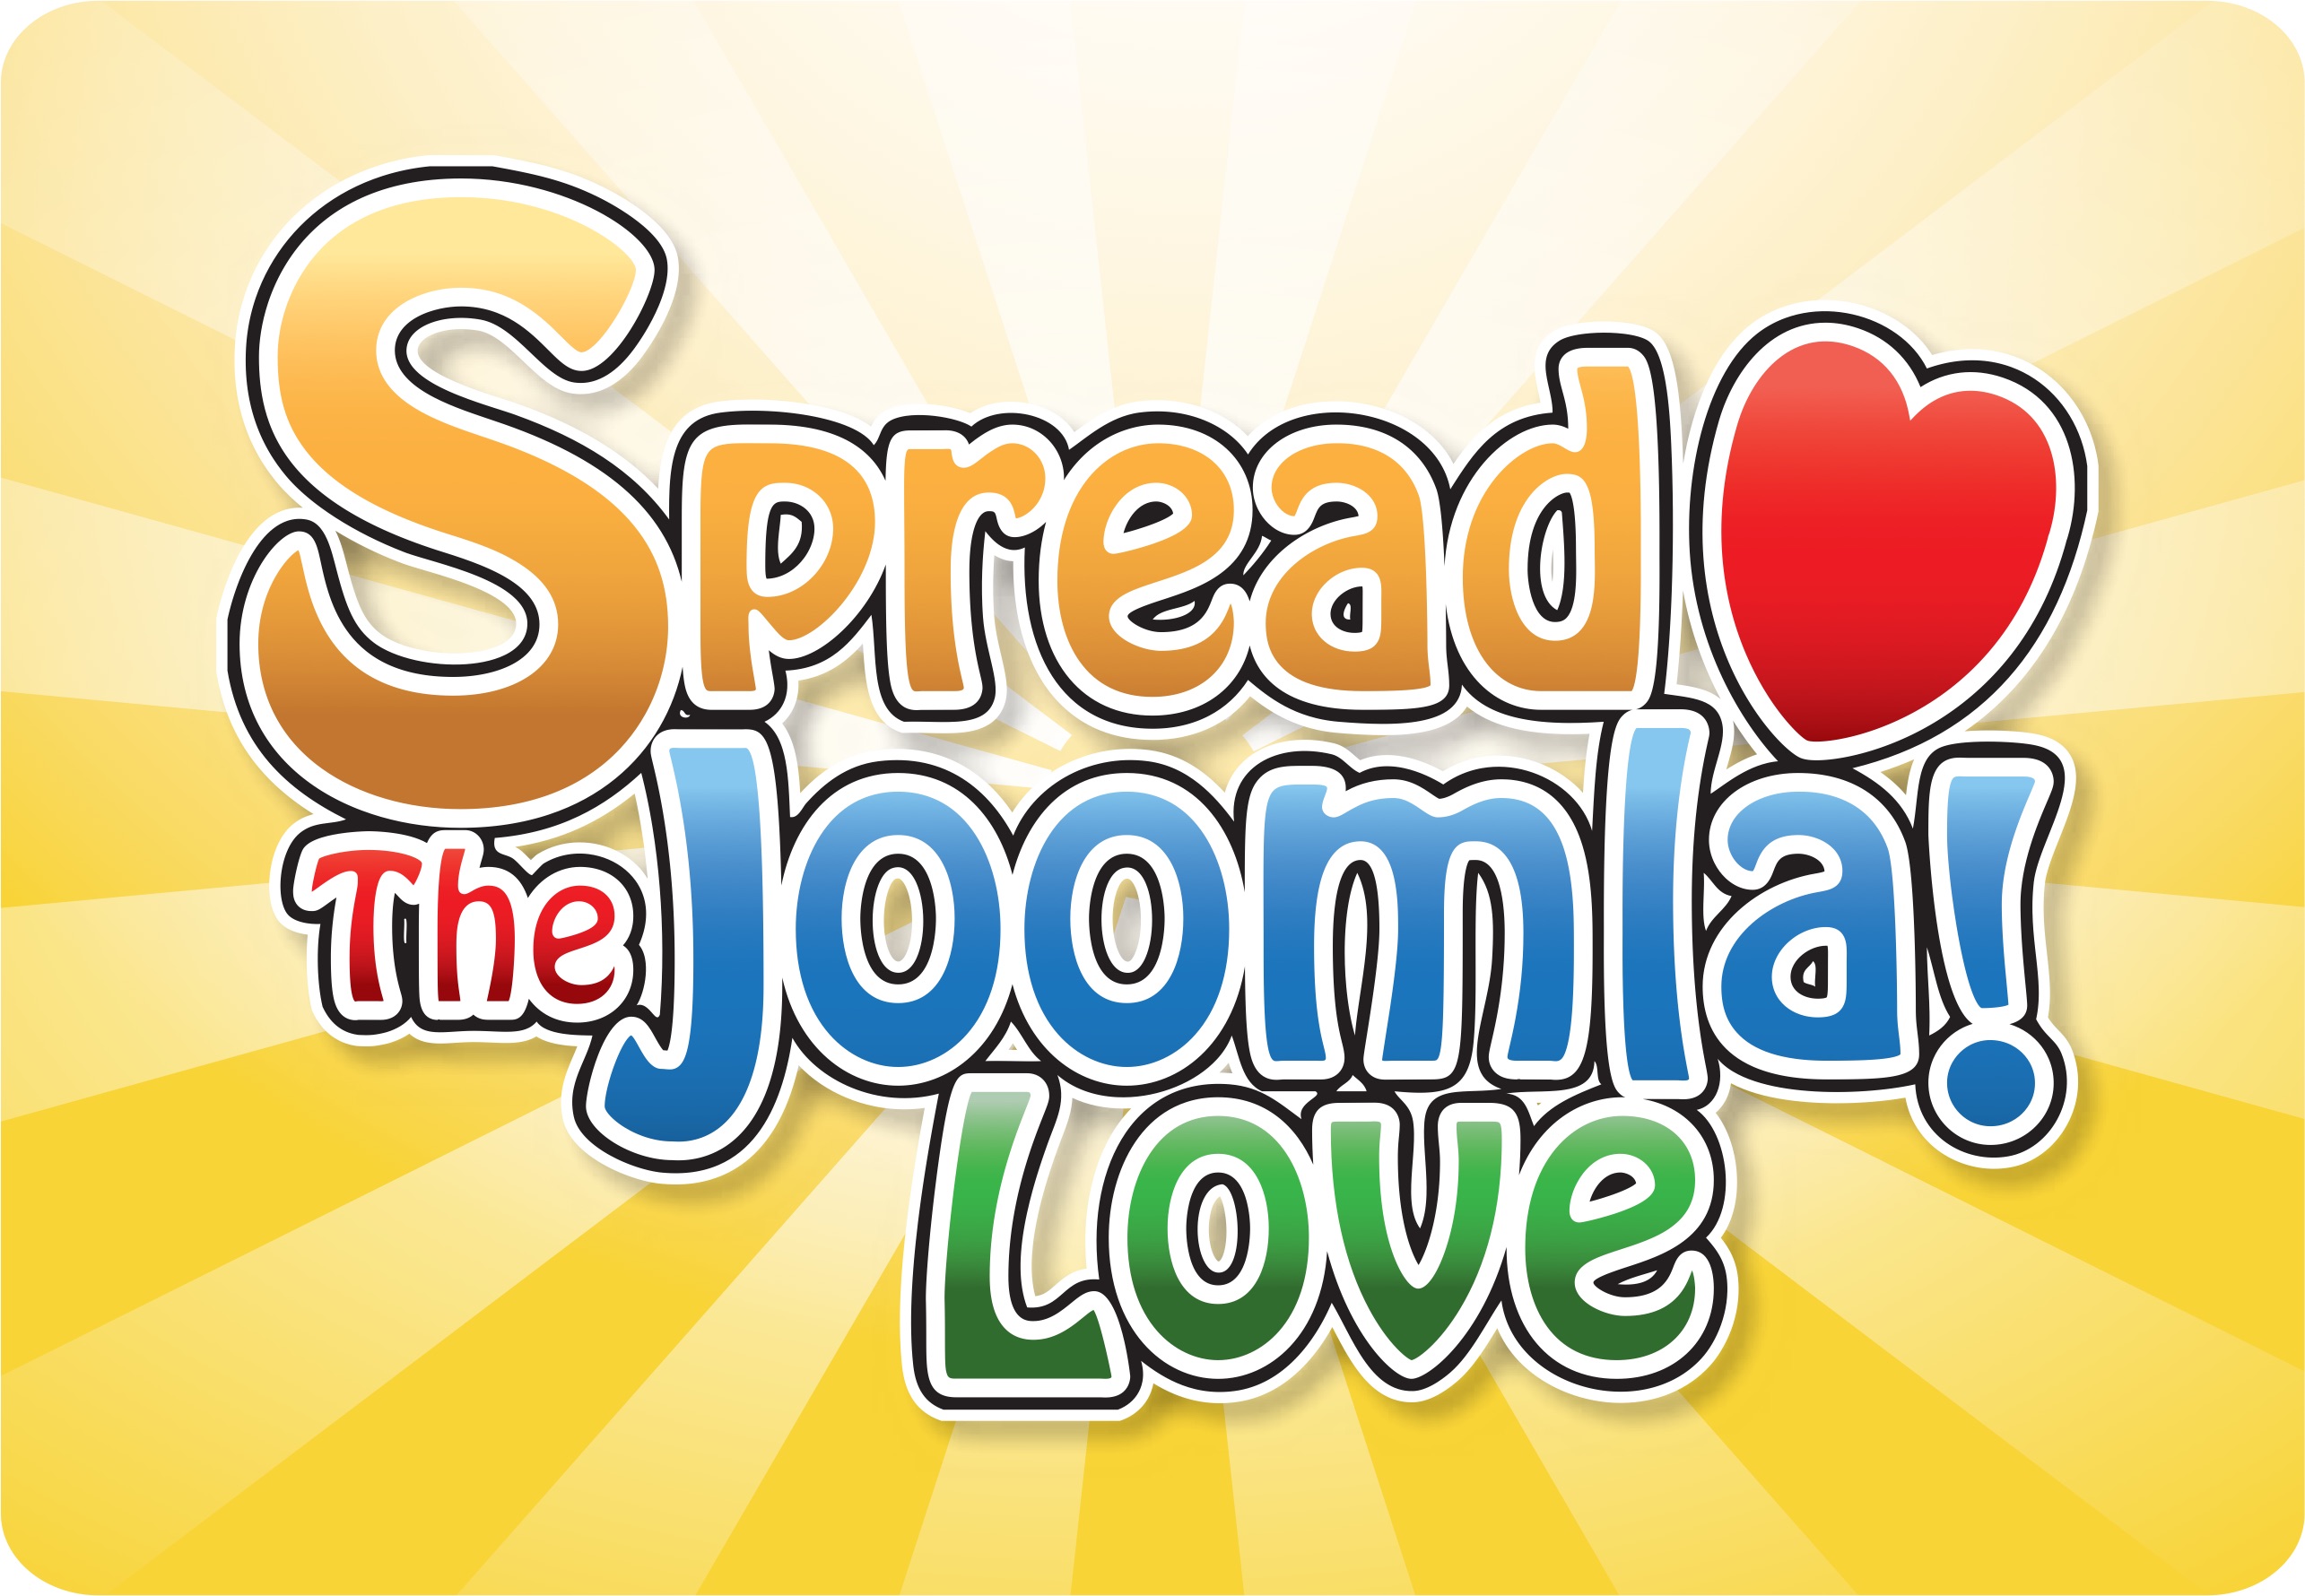 Spread The Joomla! Love